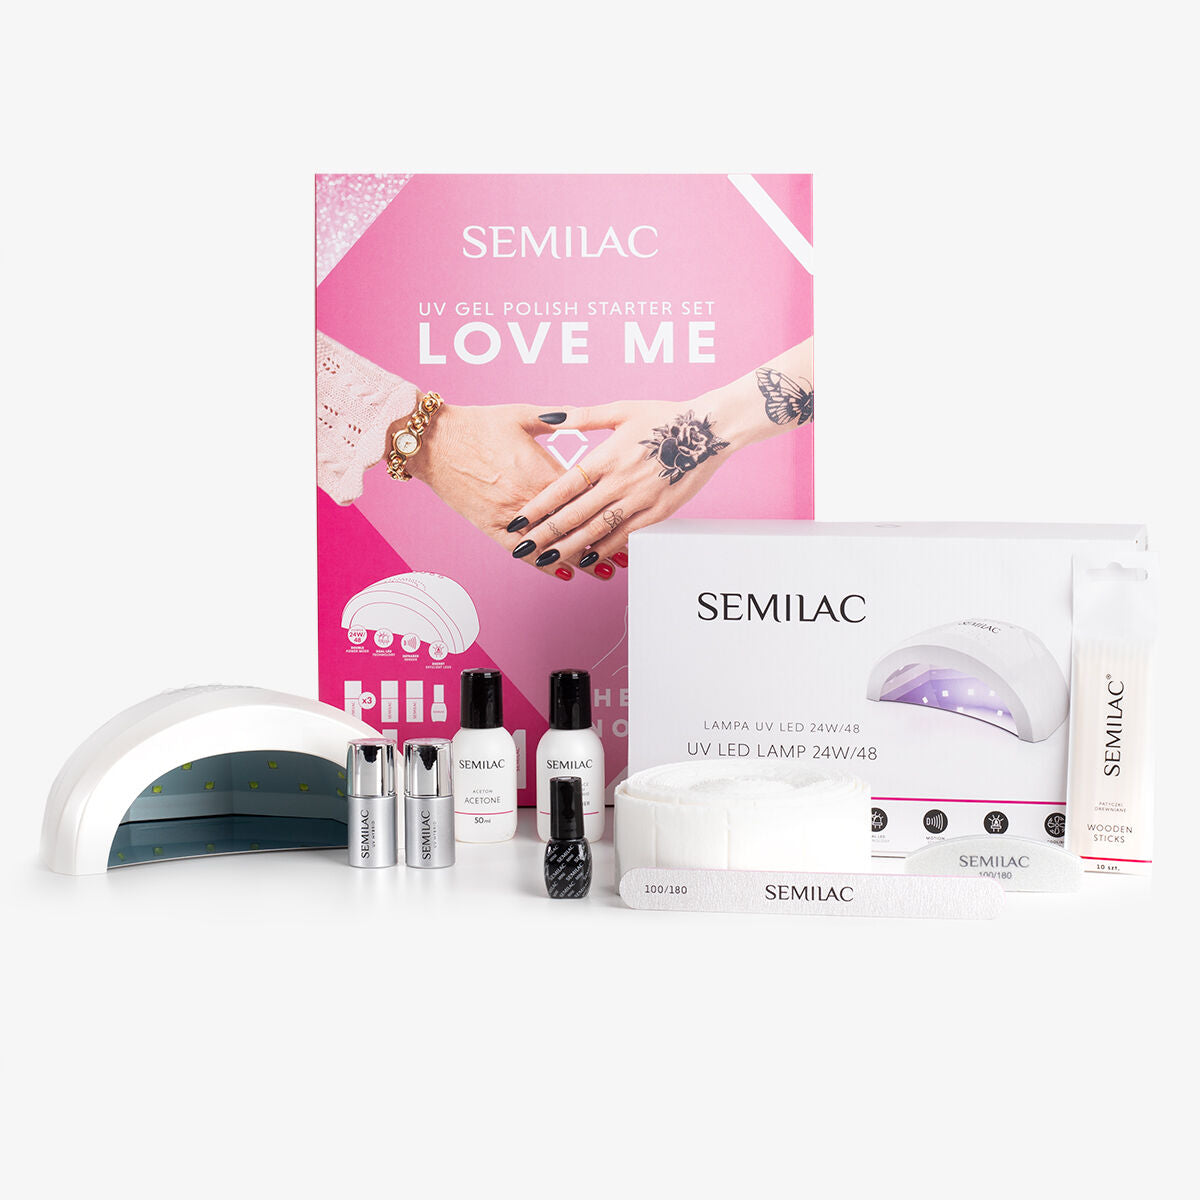 Semilac UV Gel Polish Starter Set LOVE ME - Semilac UK